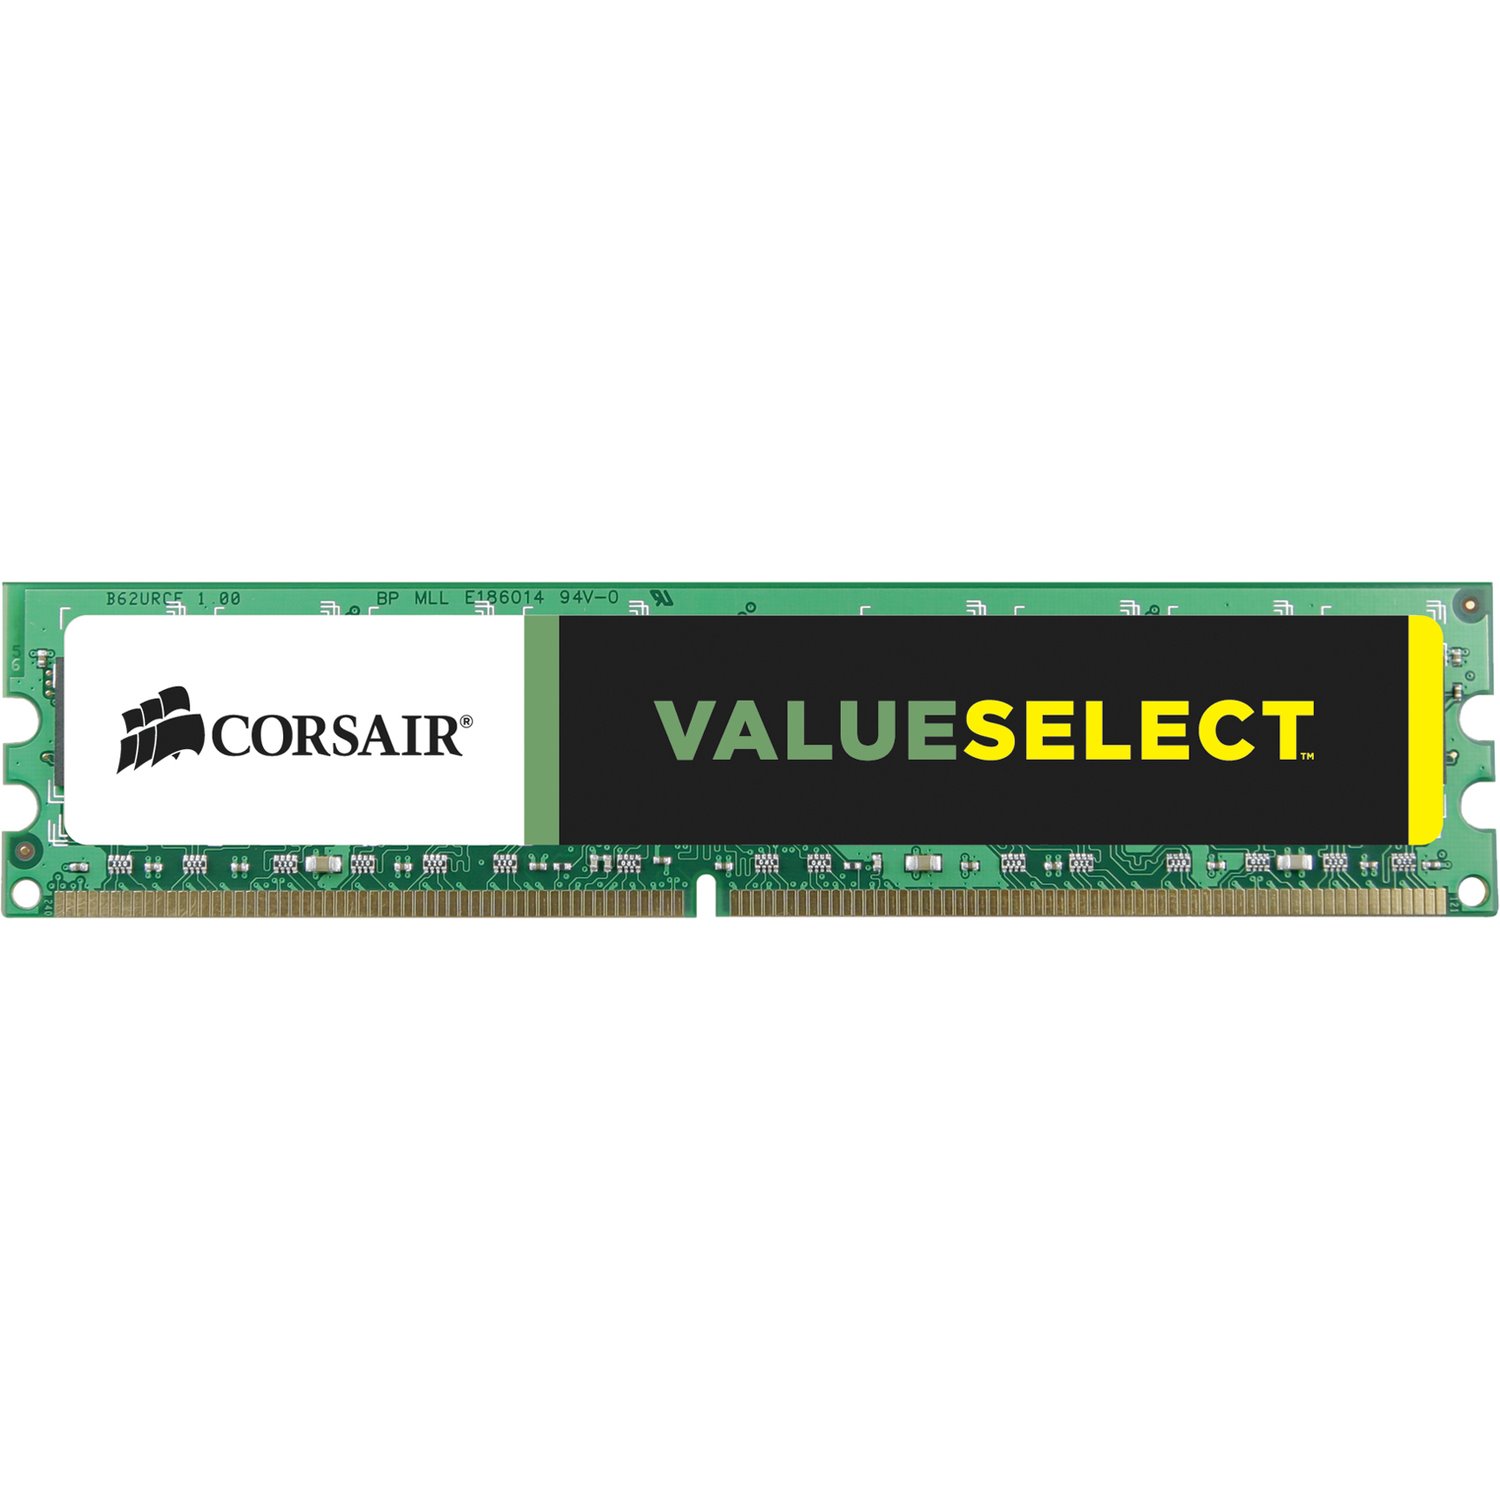 Corsair ValueSelect RAM Module - 8 GB (1 x 8GB) - DDR3-1600/PC3-12800 DDR3 SDRAM - 1600 MHz - CL11 - 1.50 V